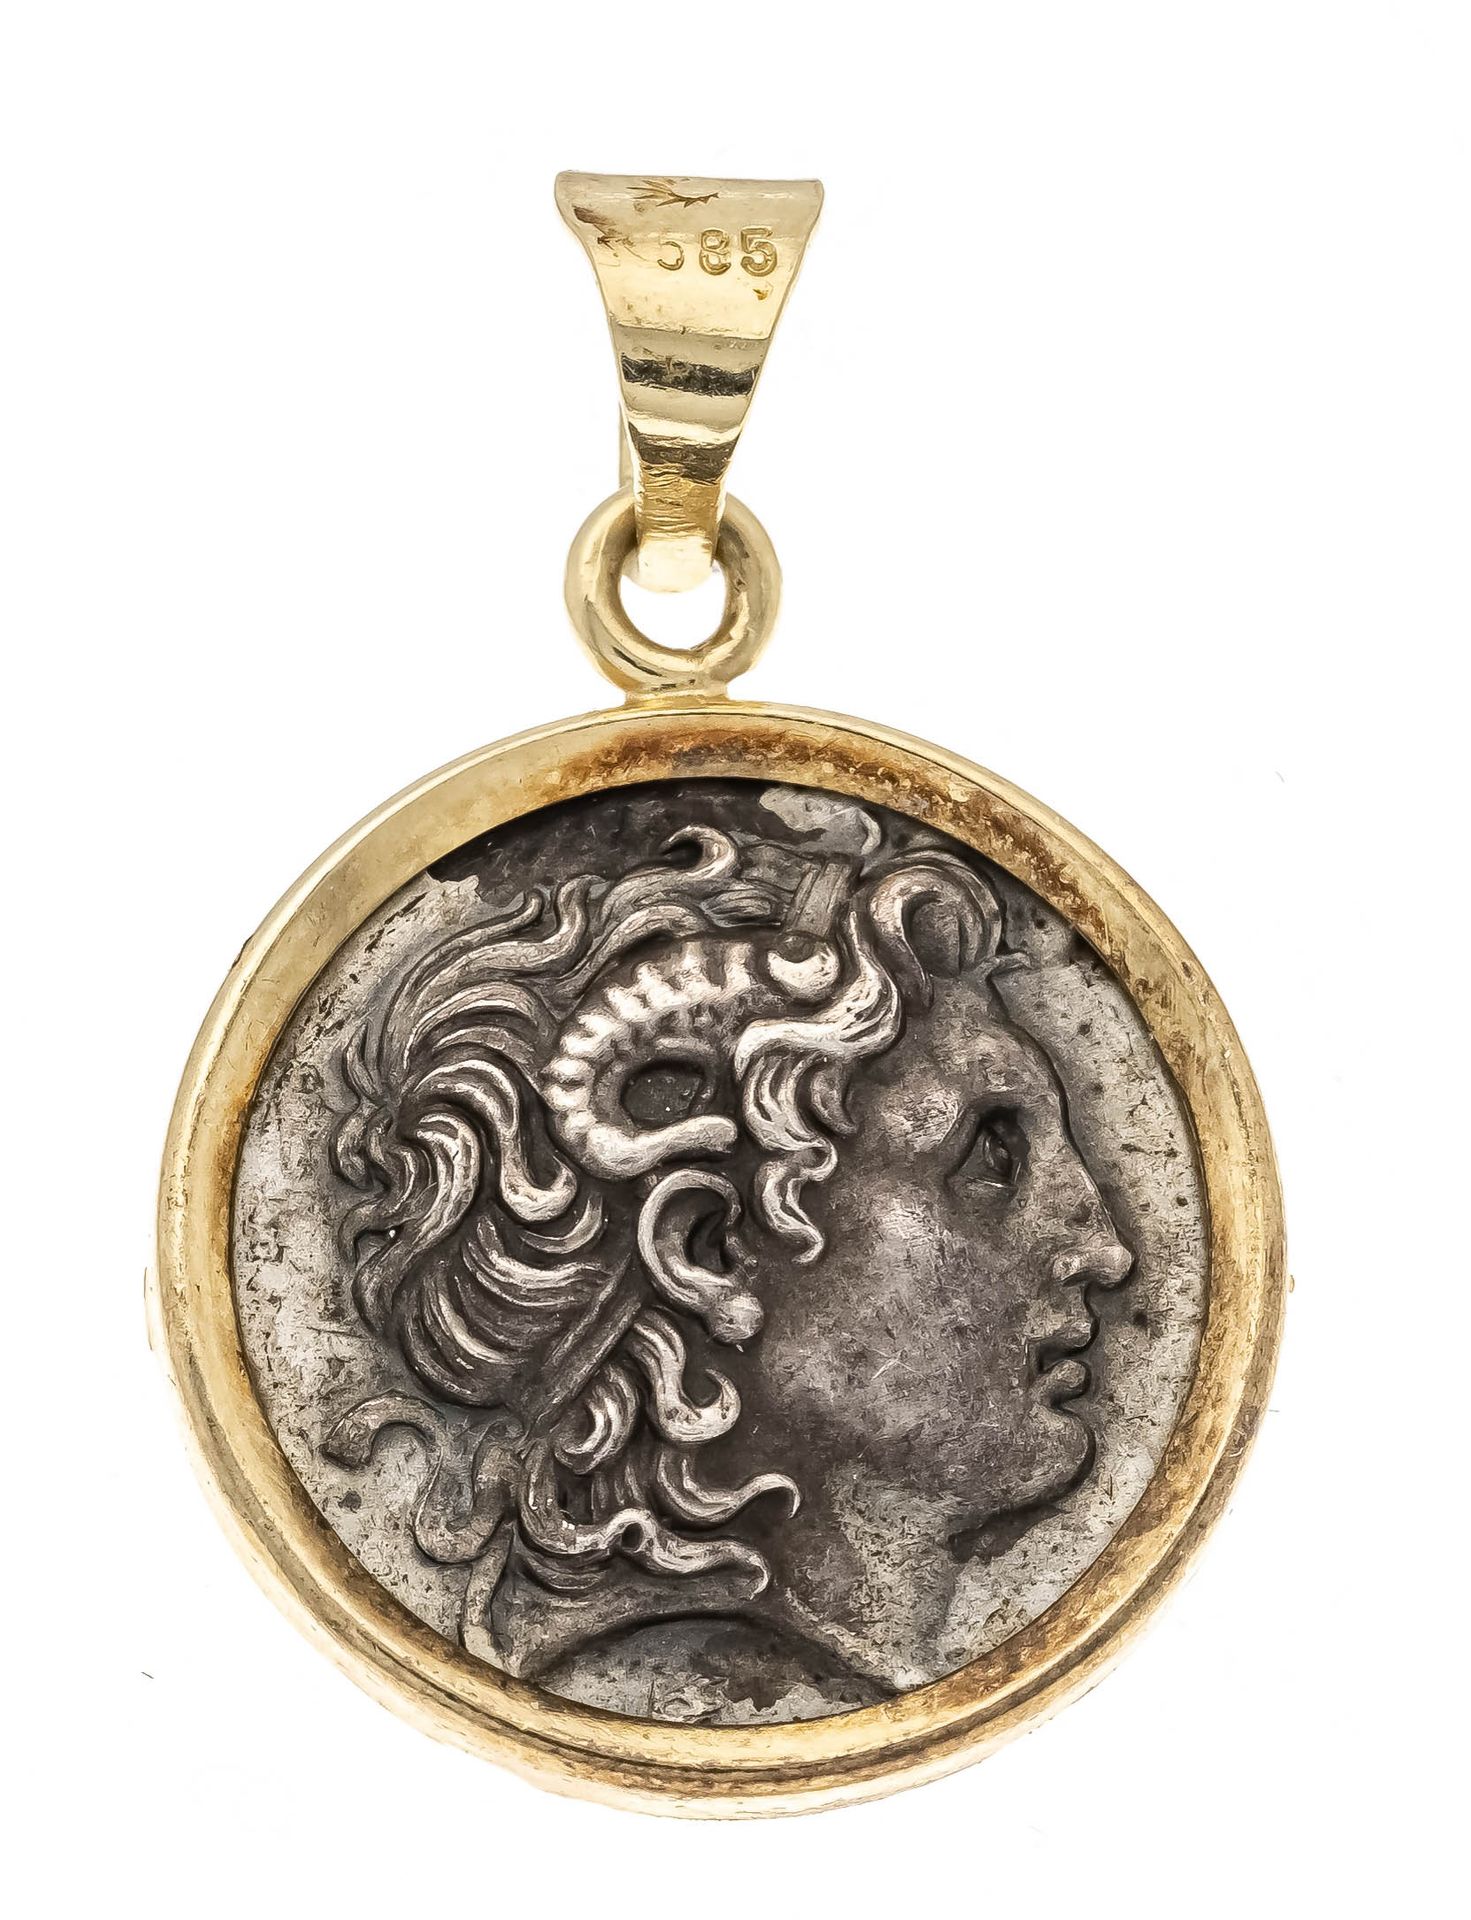 Null 钱币 "吊坠GG 585/000，带有希腊钱币的现代复制品，银质，正面是赫拉克勒斯的头像，背面是王座上的宙斯，长26毫米，重3.9克